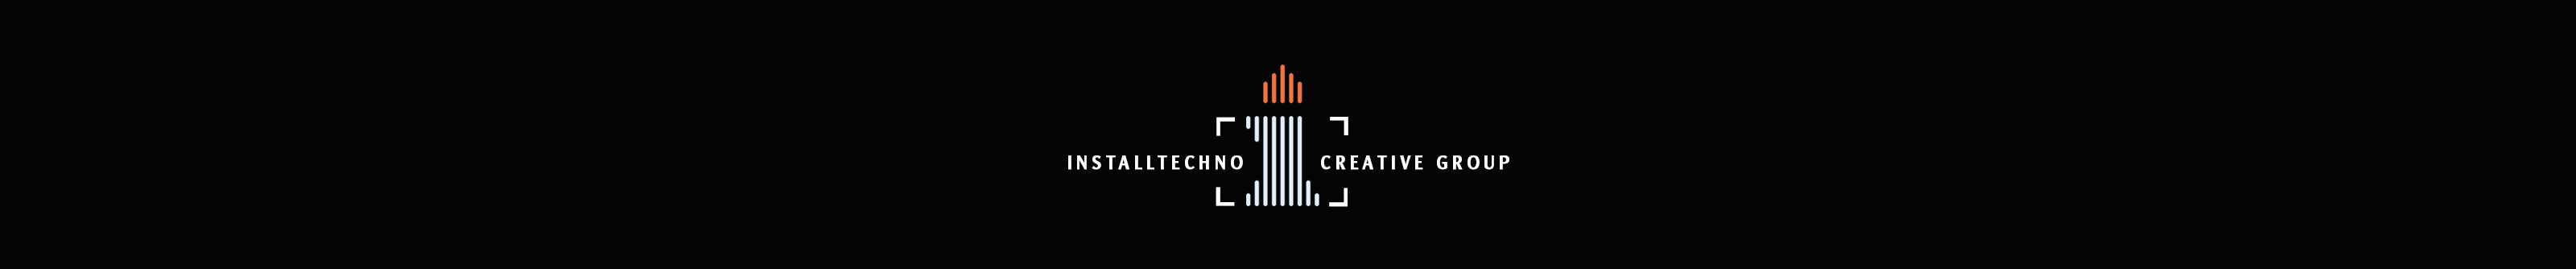 Installtechno Creative Group's profile banner